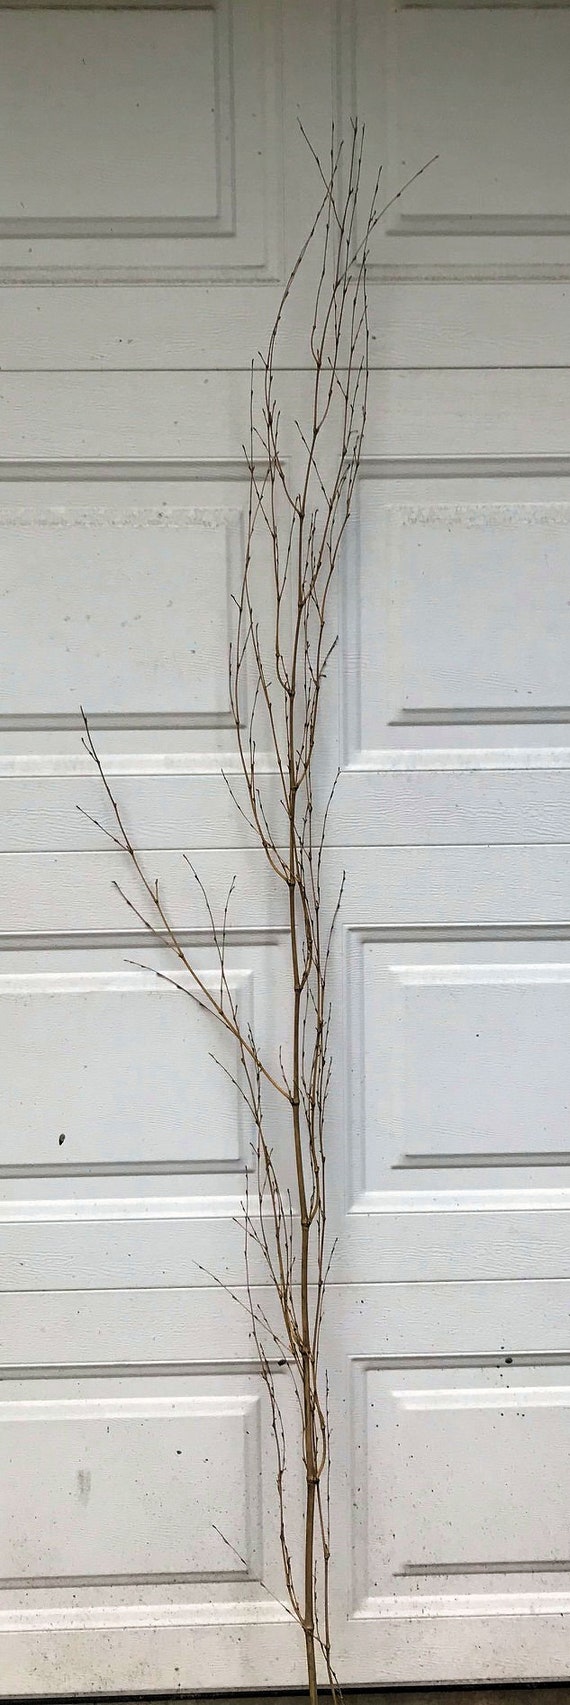 Extra Long Birch Twigs 25 Long Bundled Birch Twigs 20 to 24 Long Farmhouse  Decor Floral Arrangements Rustic Wedding 